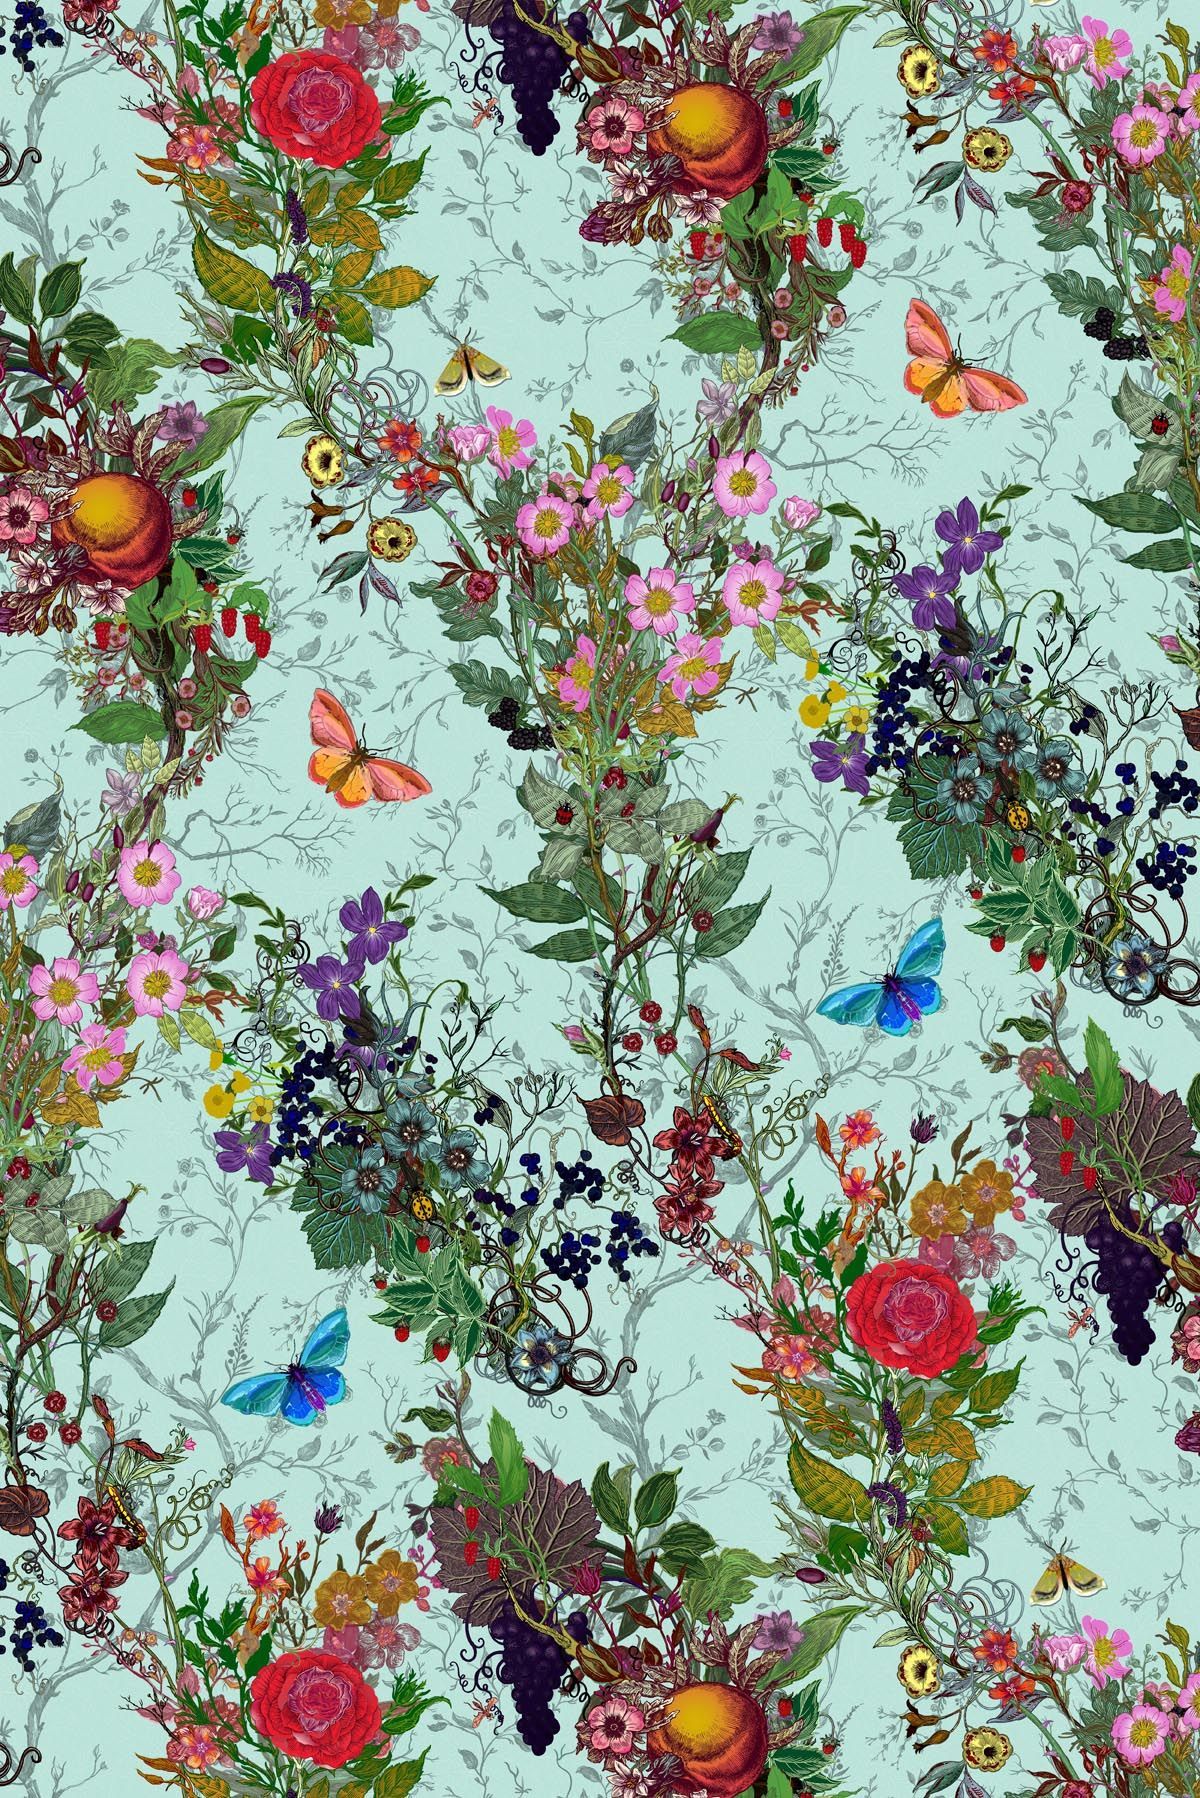 flower pattern wallpaper,flower,plant,wildflower,textile,floral design